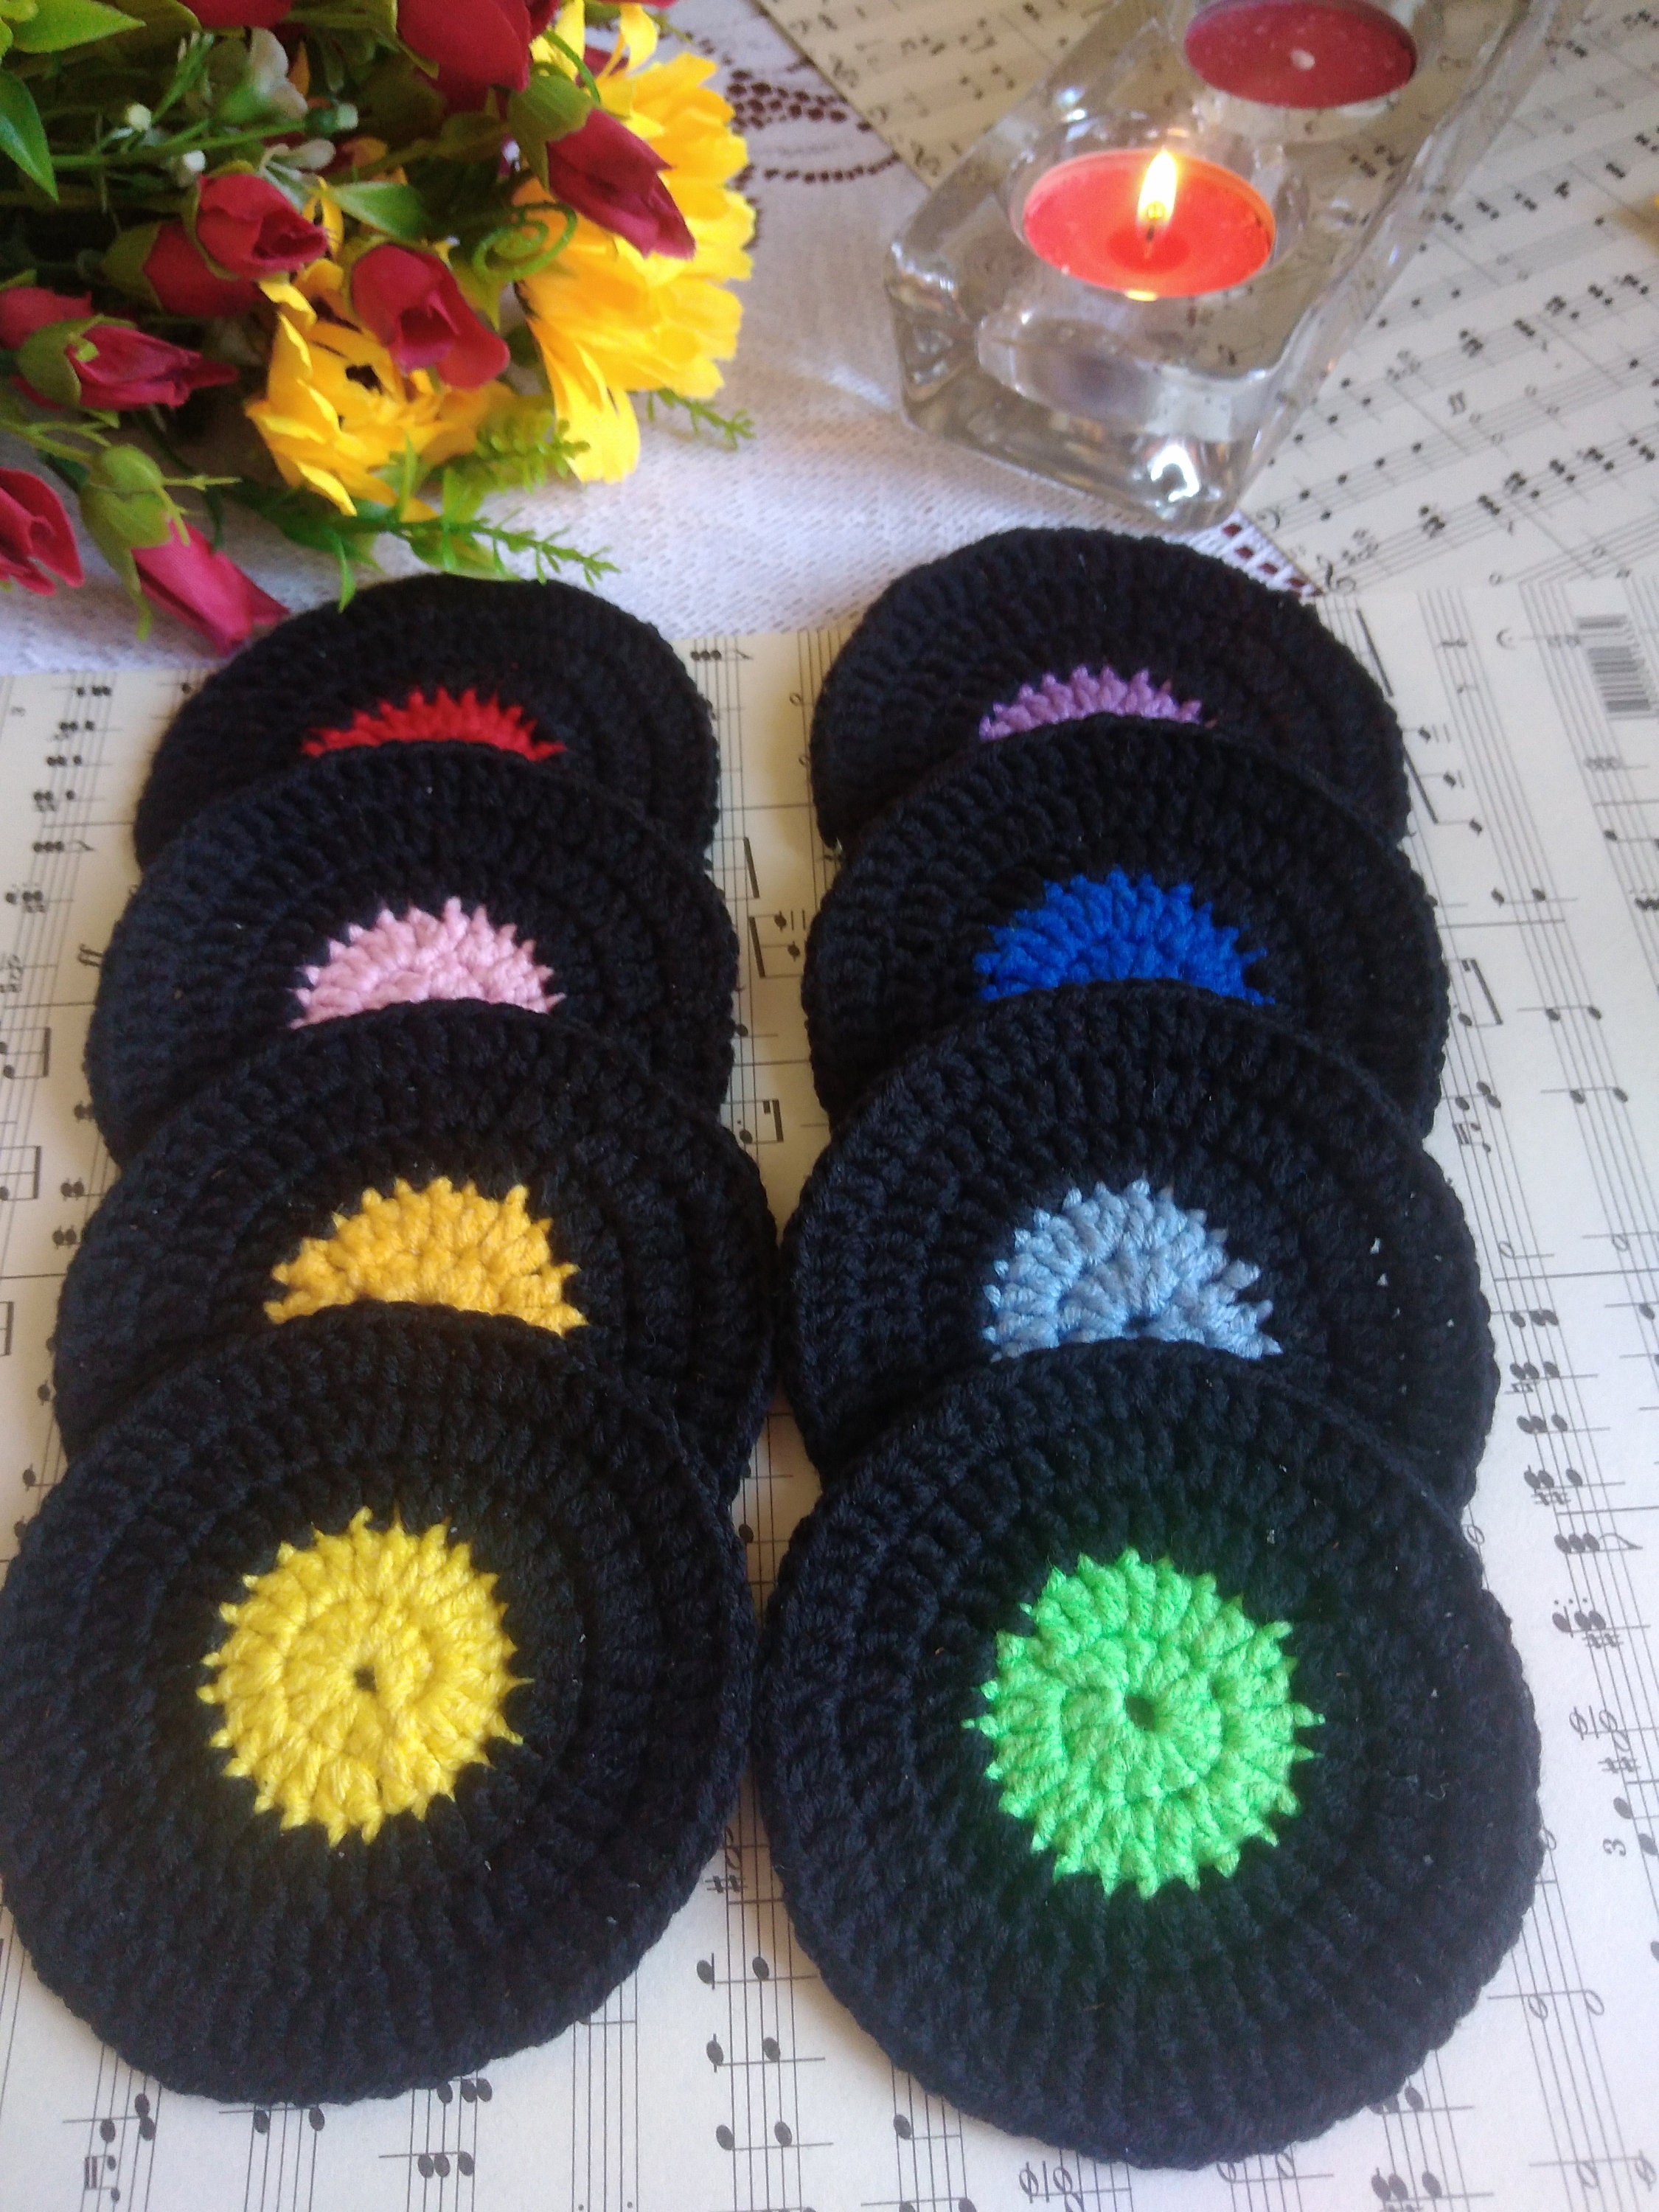 Handmade Crochet Coasters Set of 4 - Local Artist – Vintage Arts Inc.